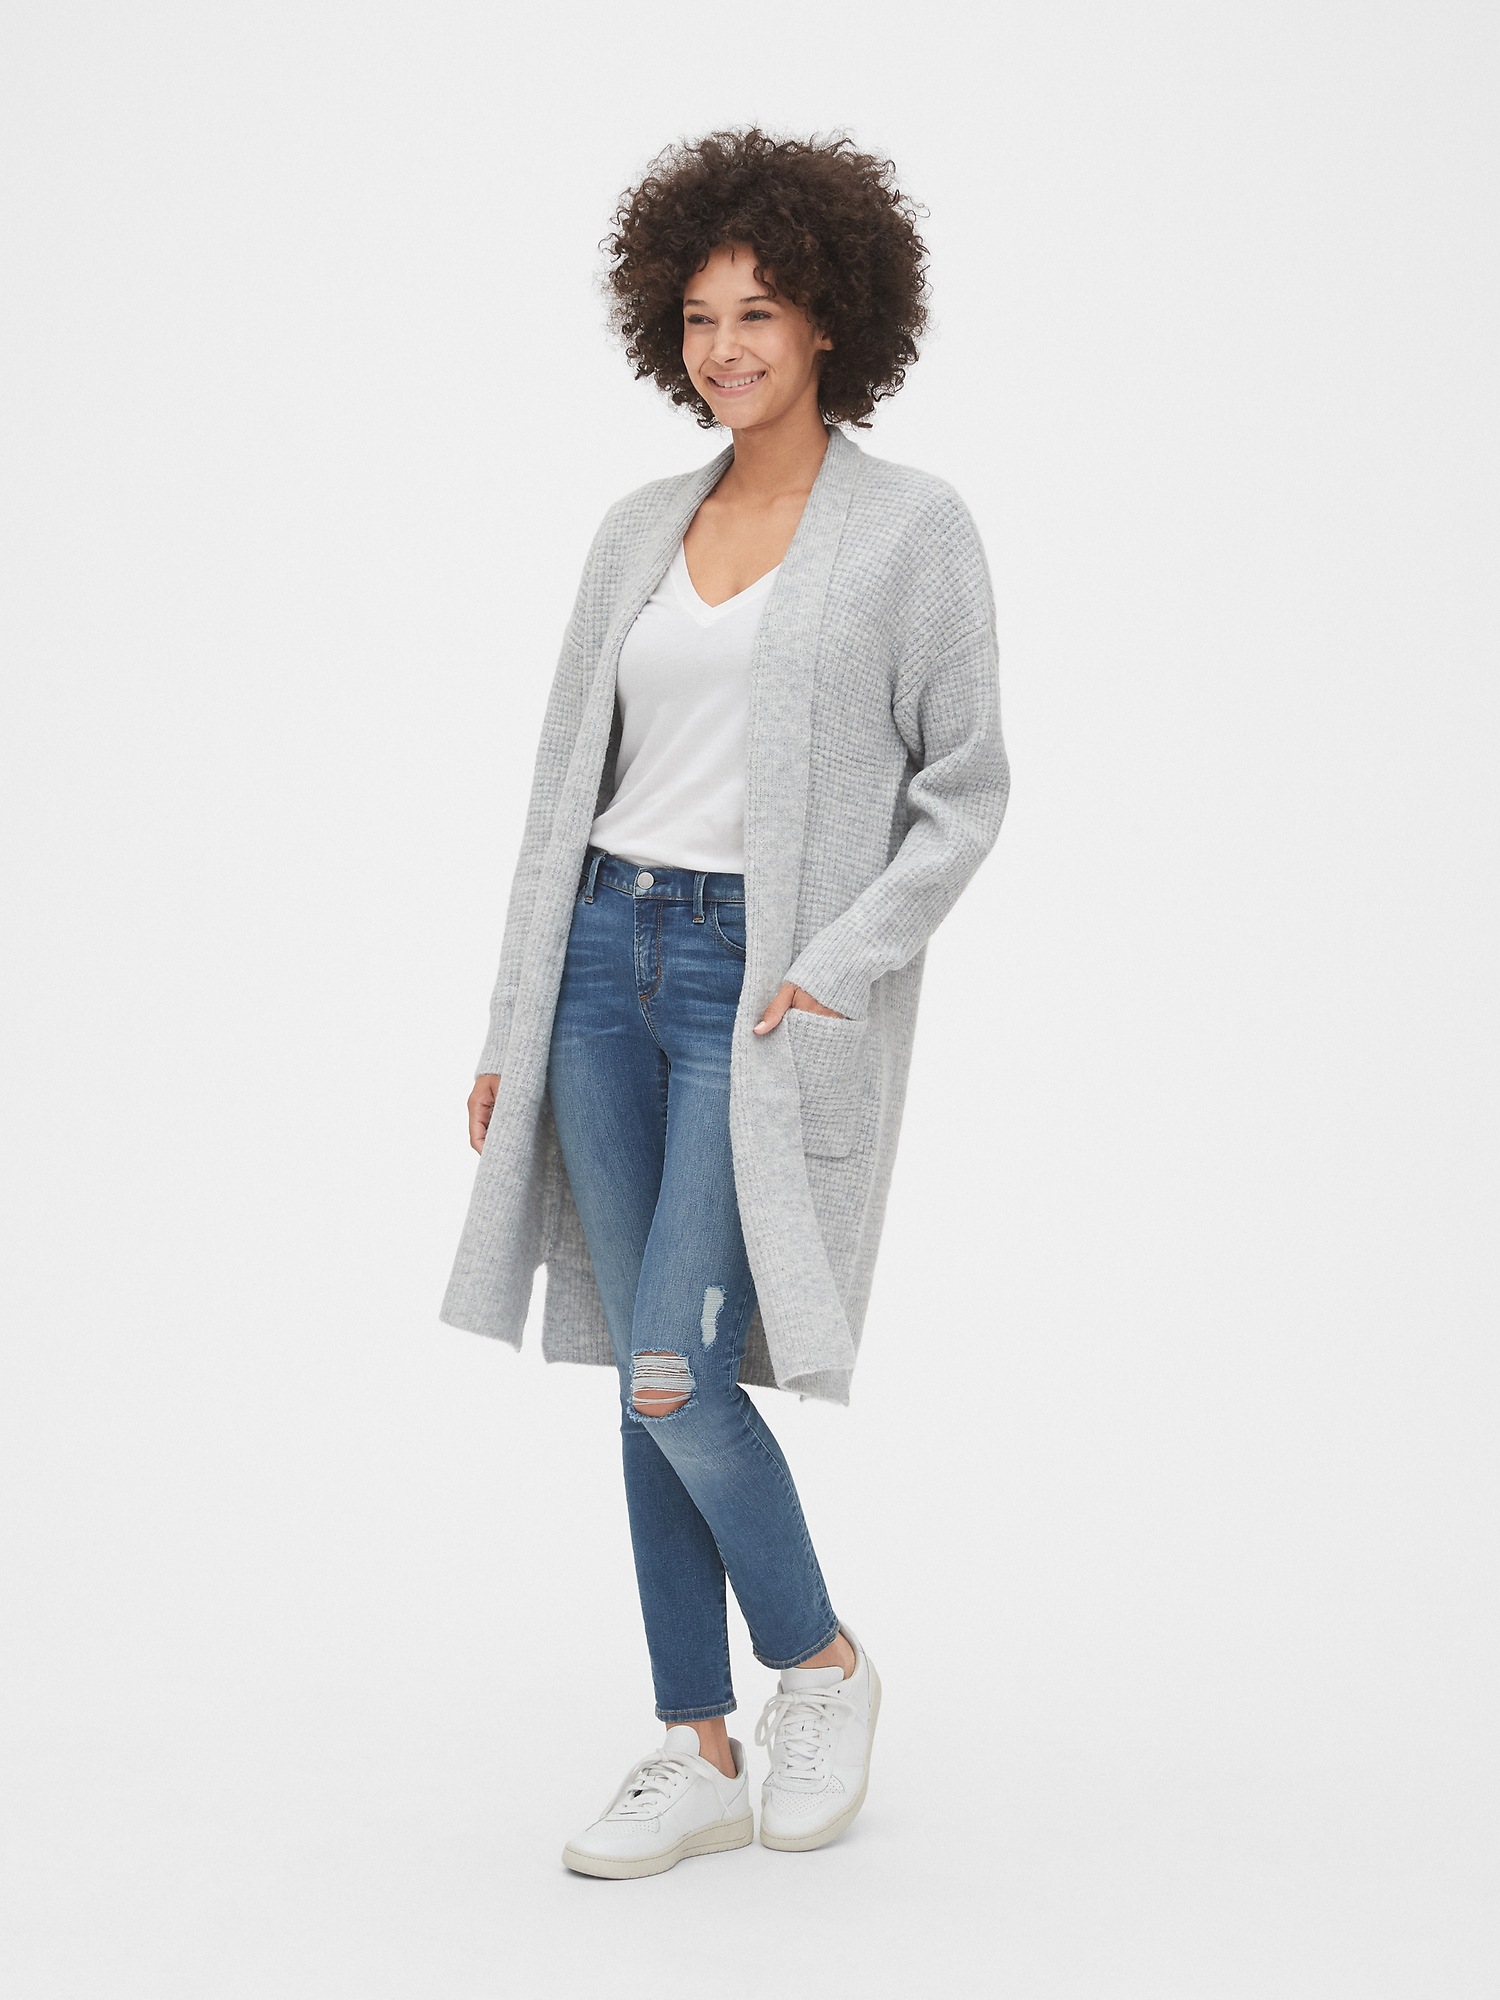 Boxy-fit waffle-knit sweater, Twik, Shop Women's Sweaters and Cardigans  Fall/Winter 2019